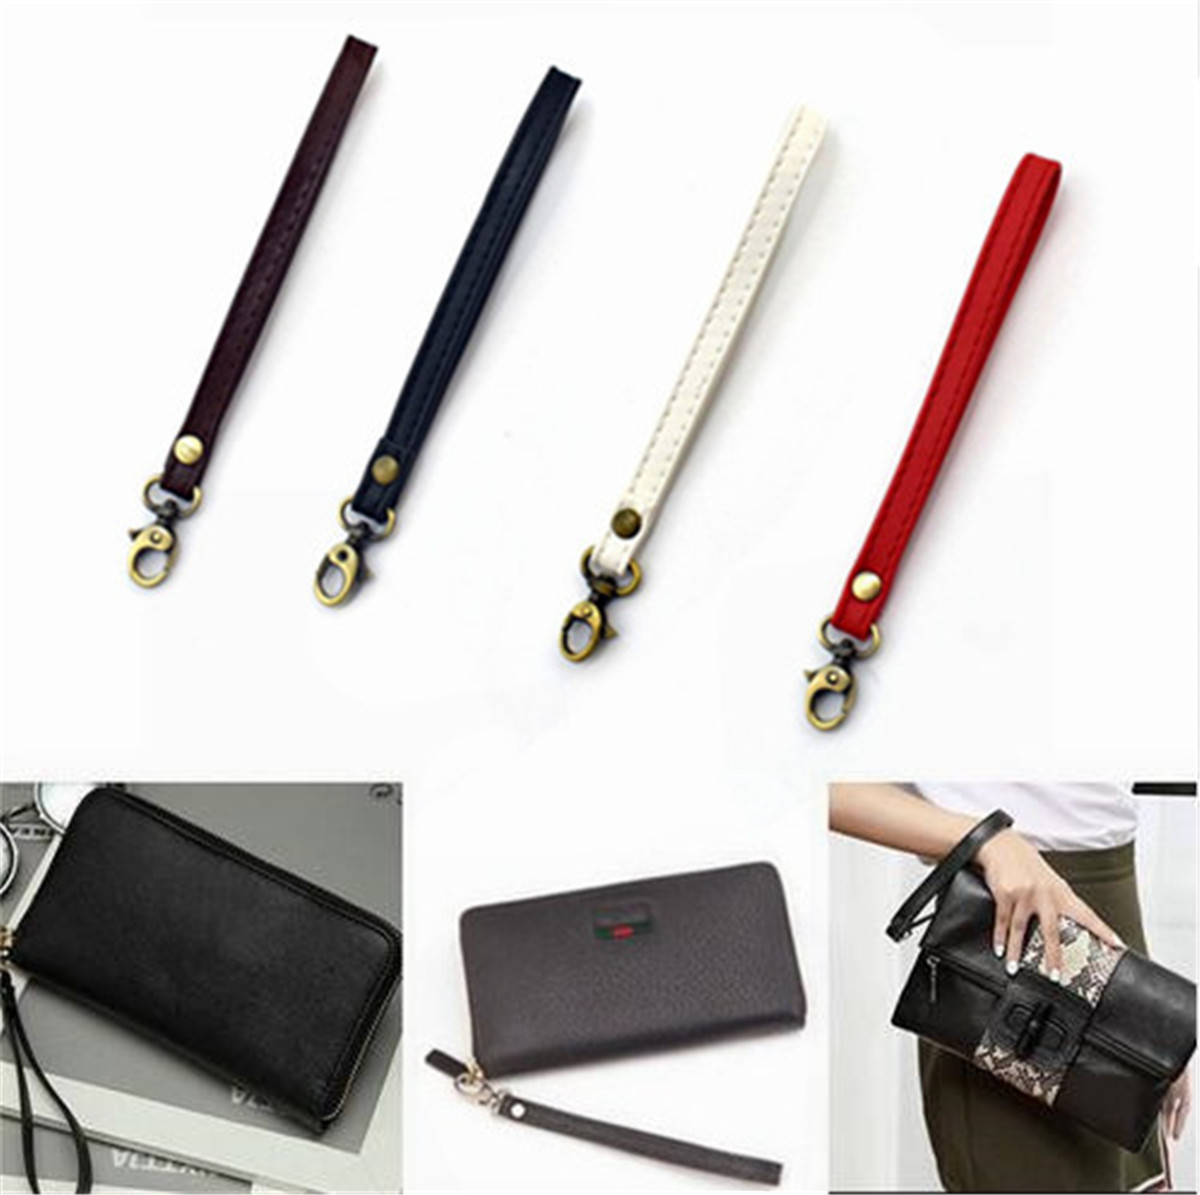 Replacement Wrist Strap For Clutch Wristlet Pouch Coin Purse Bag Handbag | eBay